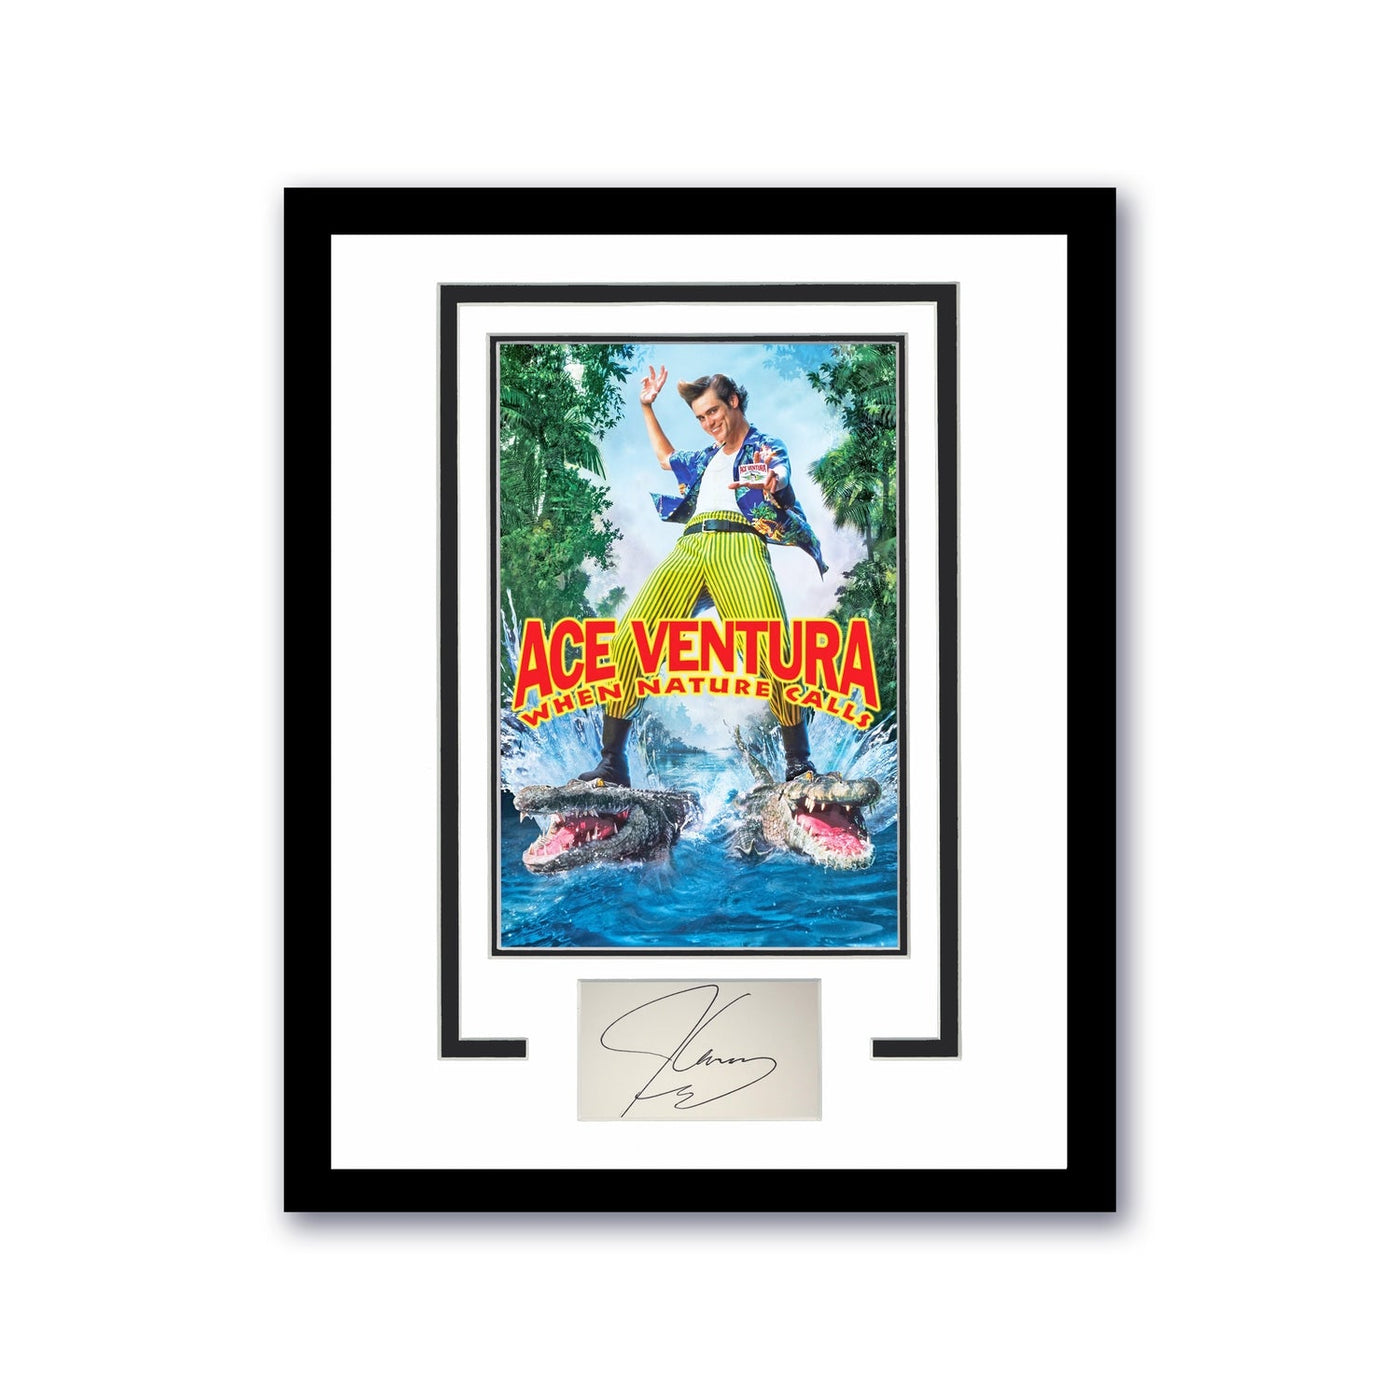 Ace Ventura Jim Carrey Autographed Signed 11x14 Framed Poster Photo ACOA 2